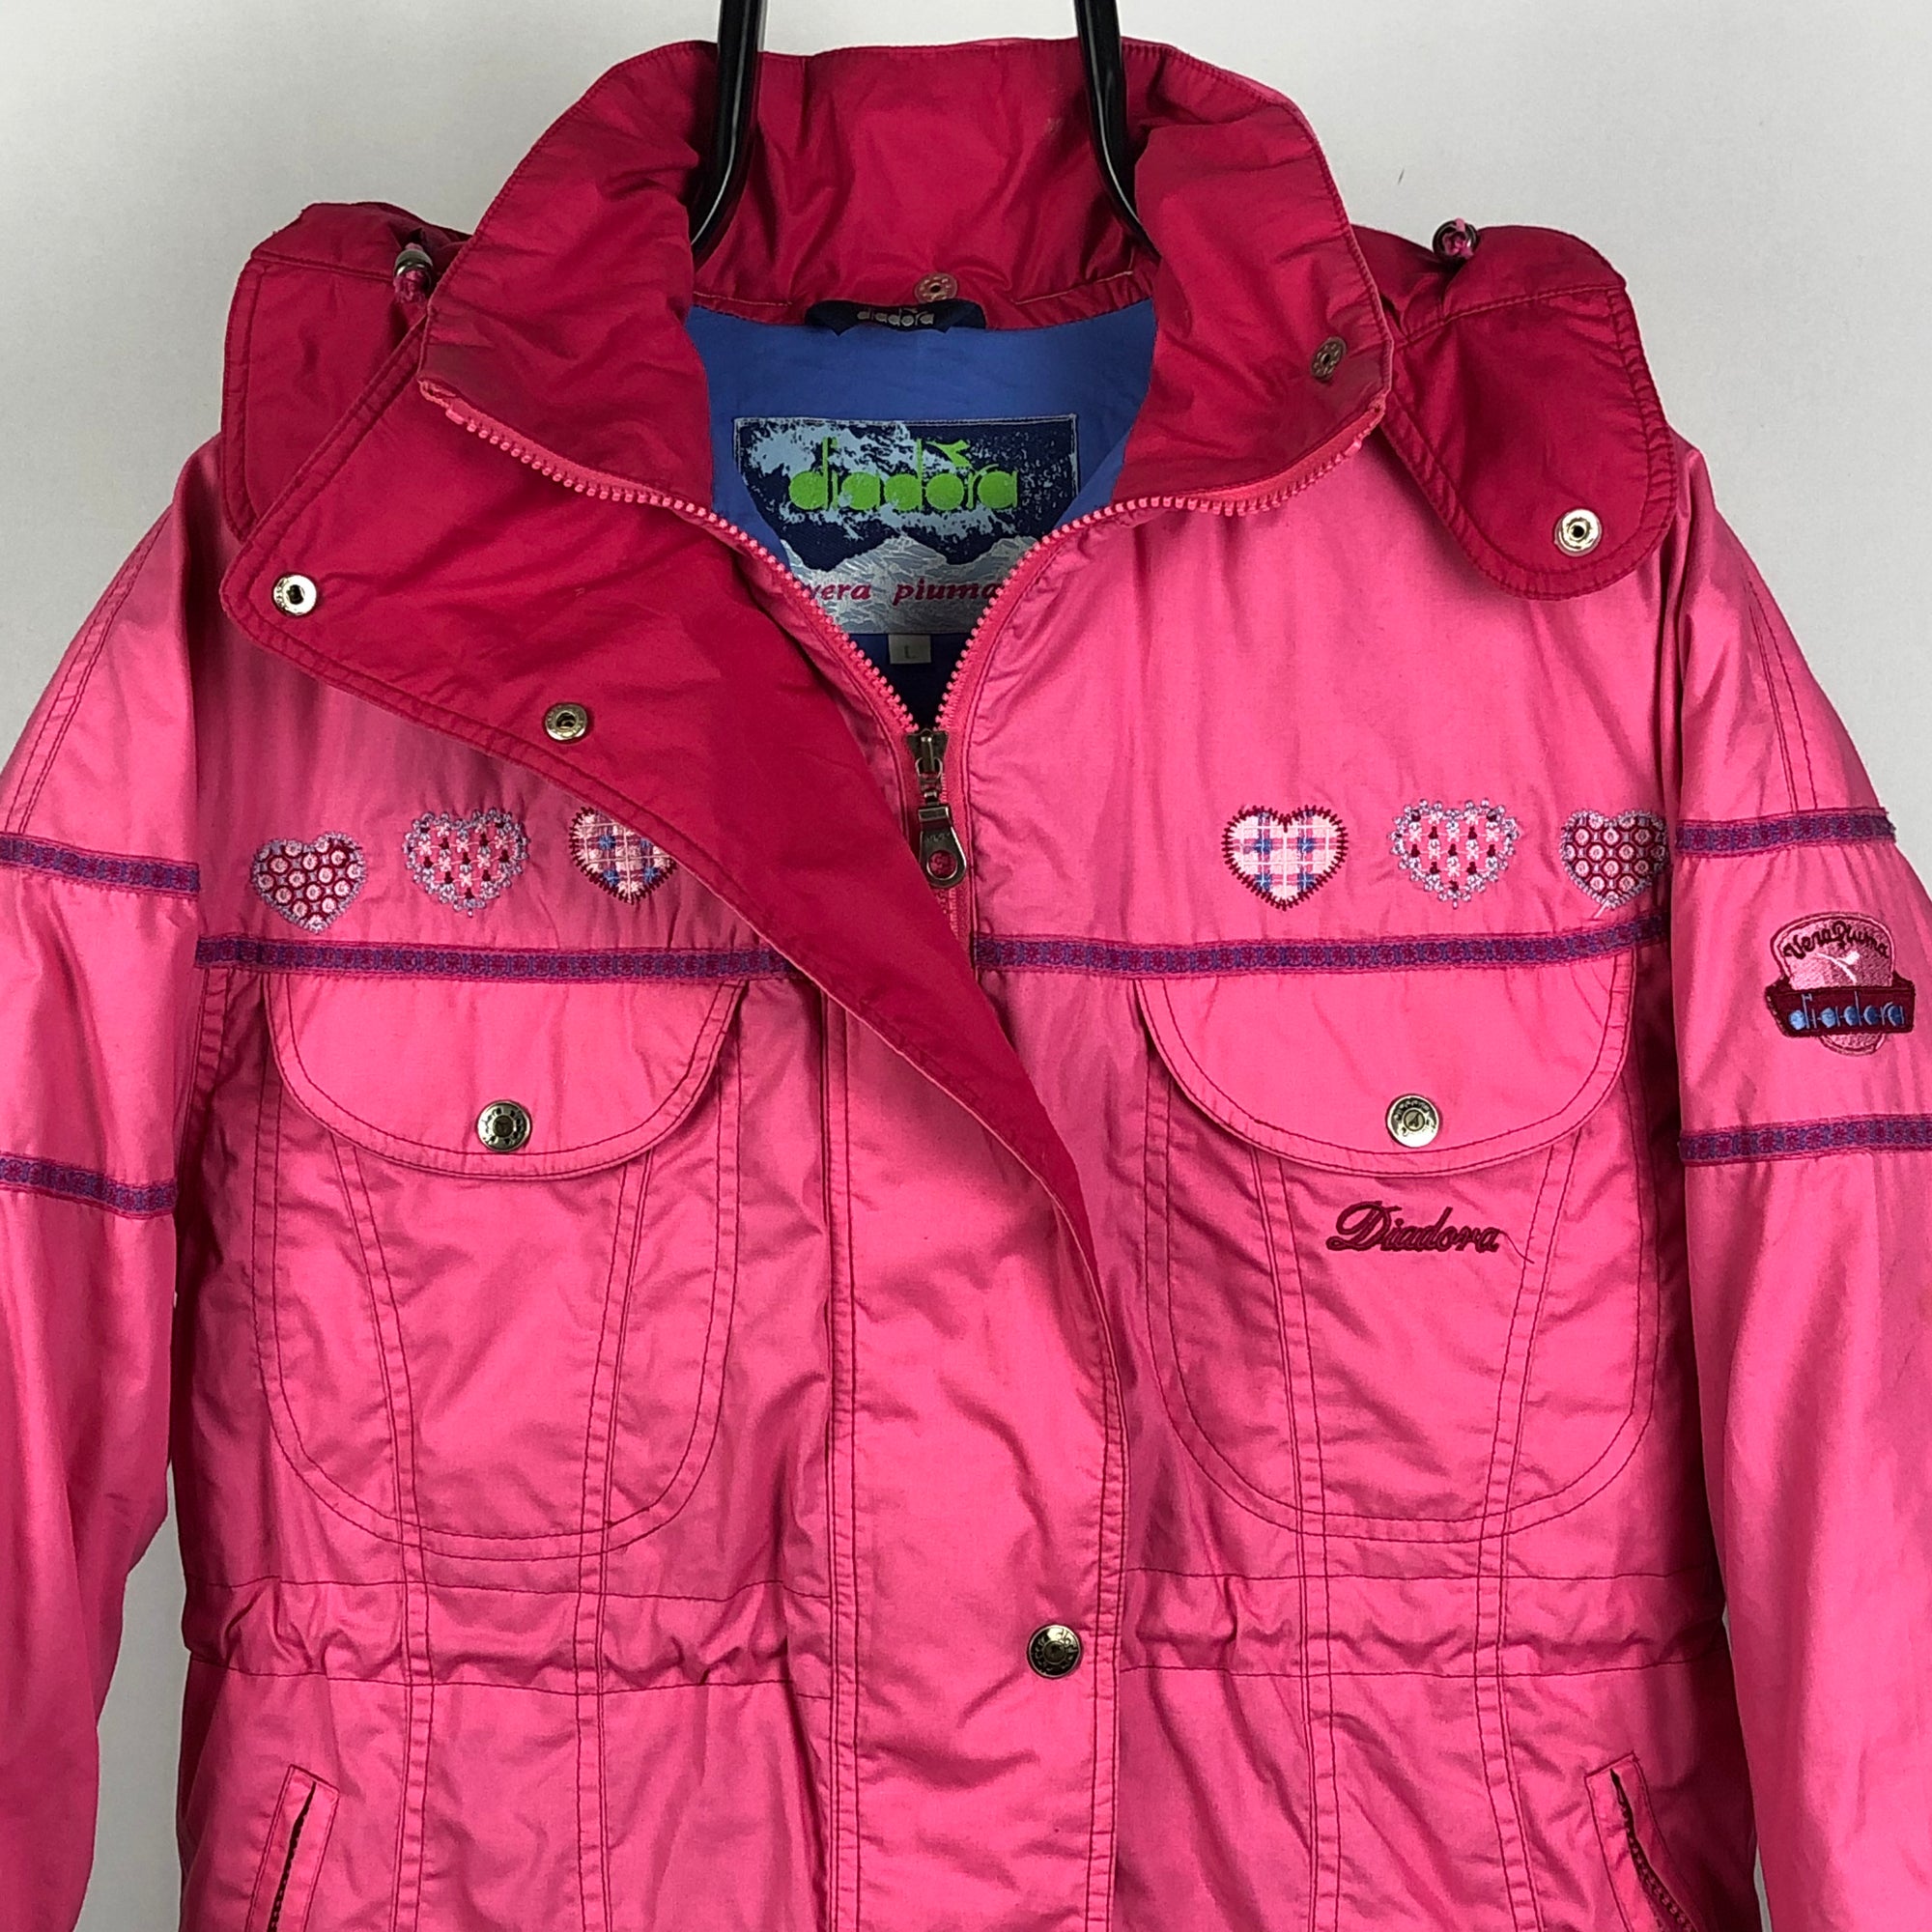 Vintage Diadora Down Puffer Jacket in Pink - Men's Small/Women's Medium